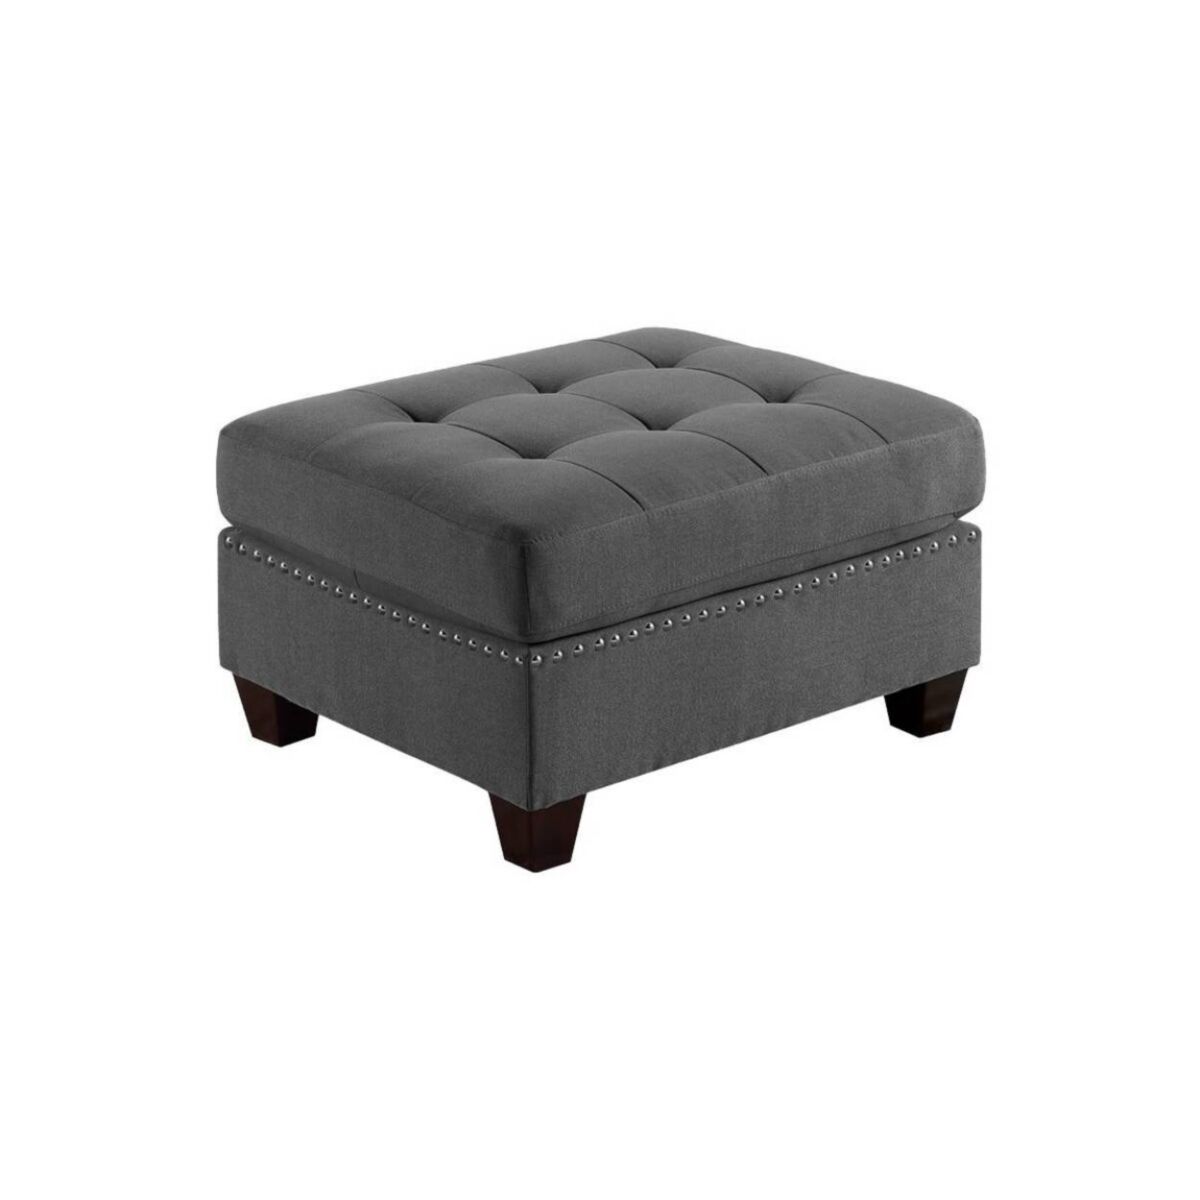 Simplie Fun Living Room Furniture Tufted Ottoman Grey Linen Like Fabric 1pc Ottoman Cushion Nail heads Wooden Legs - Grey